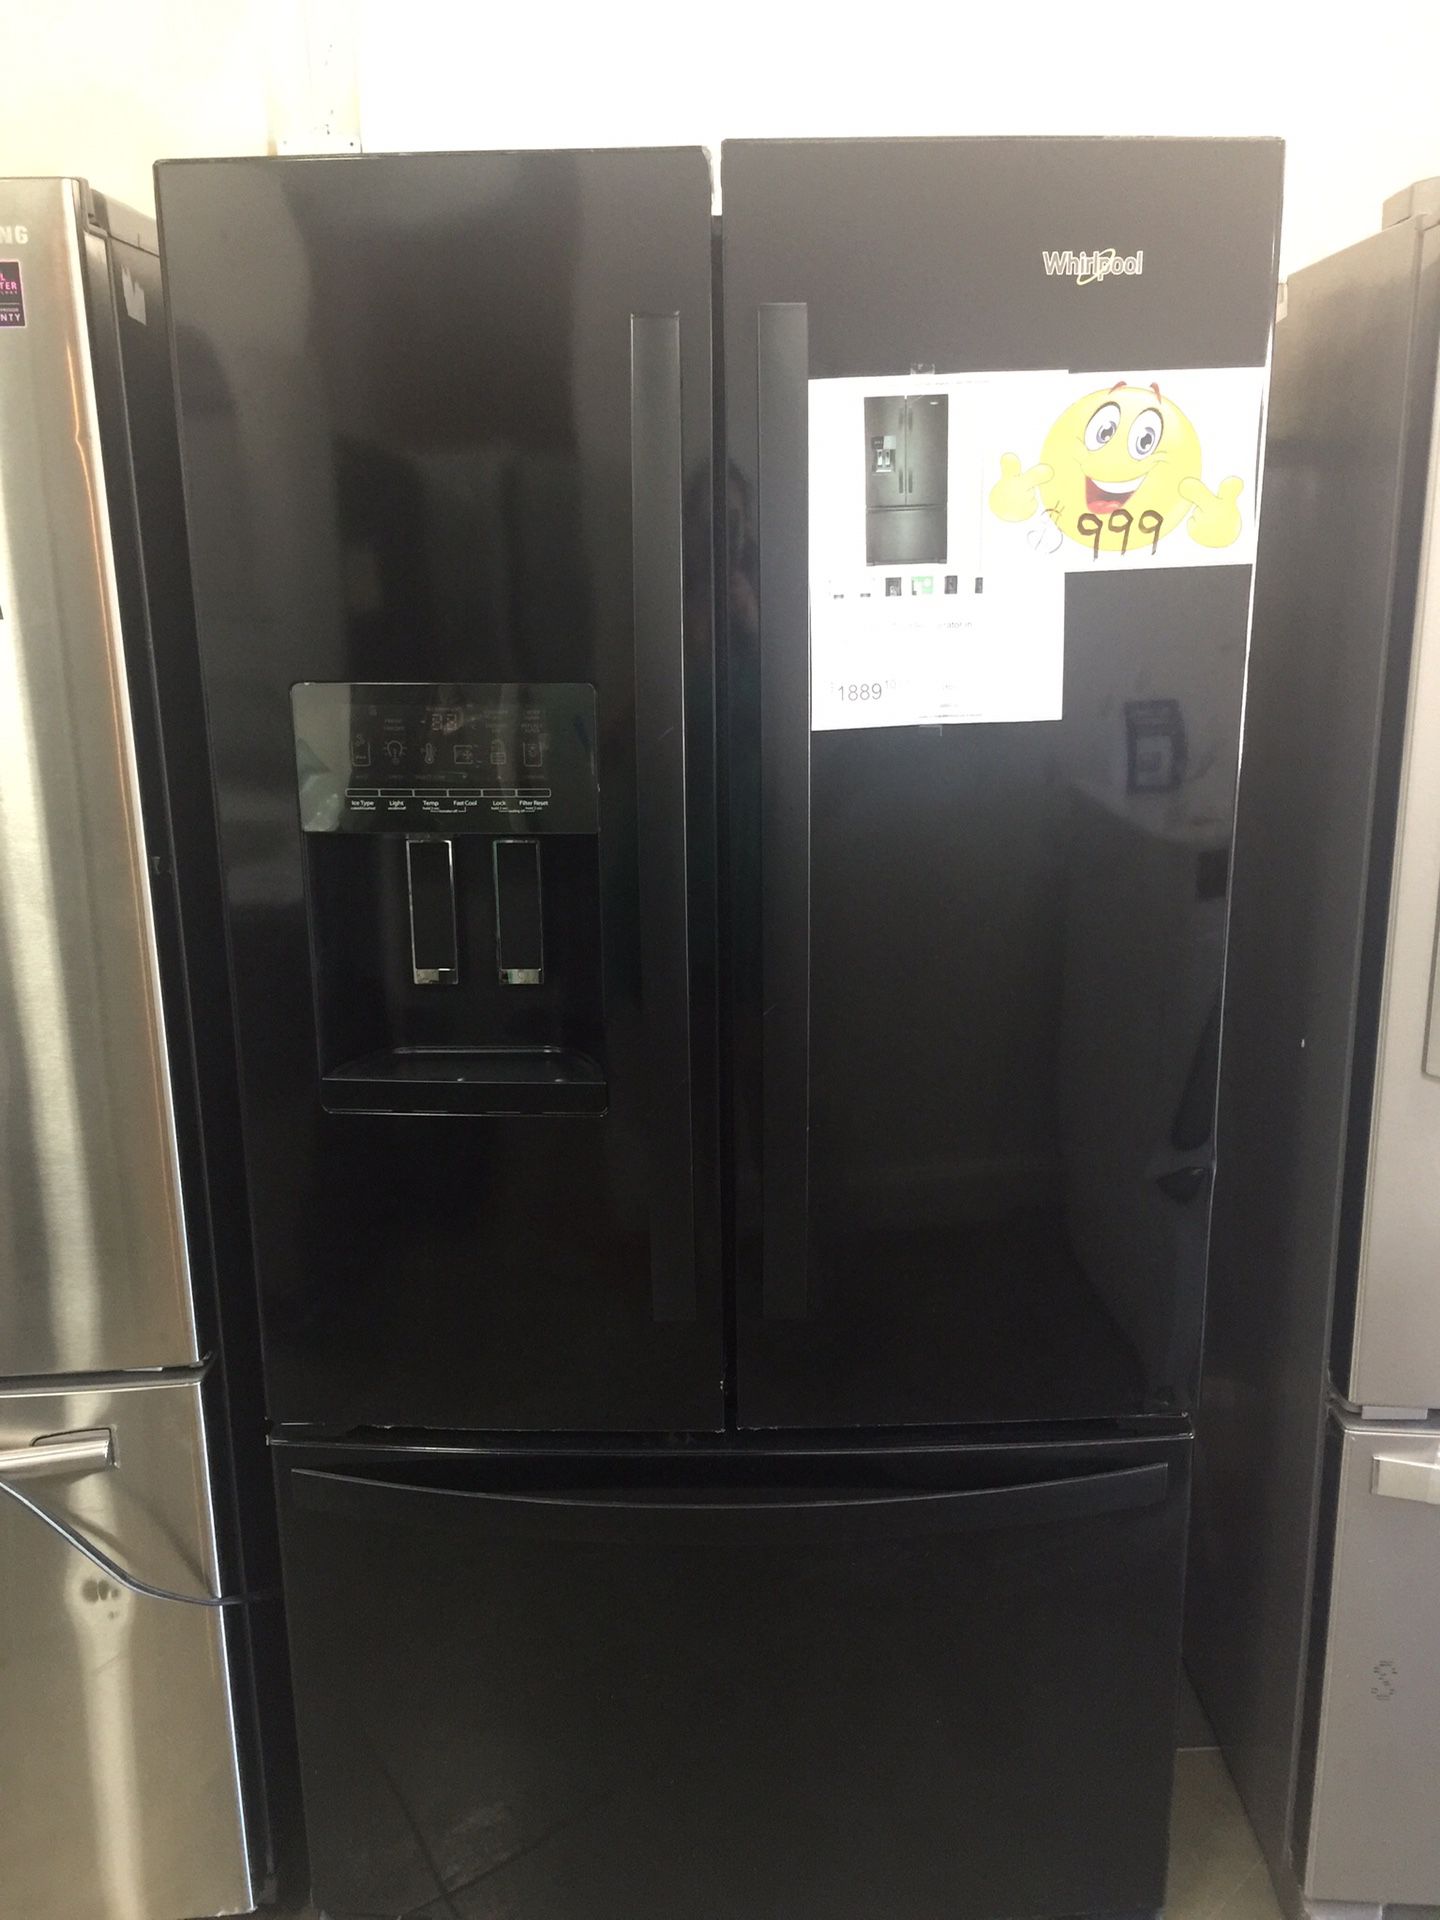 Refrigerator in black French doors New Whirlpool warranty